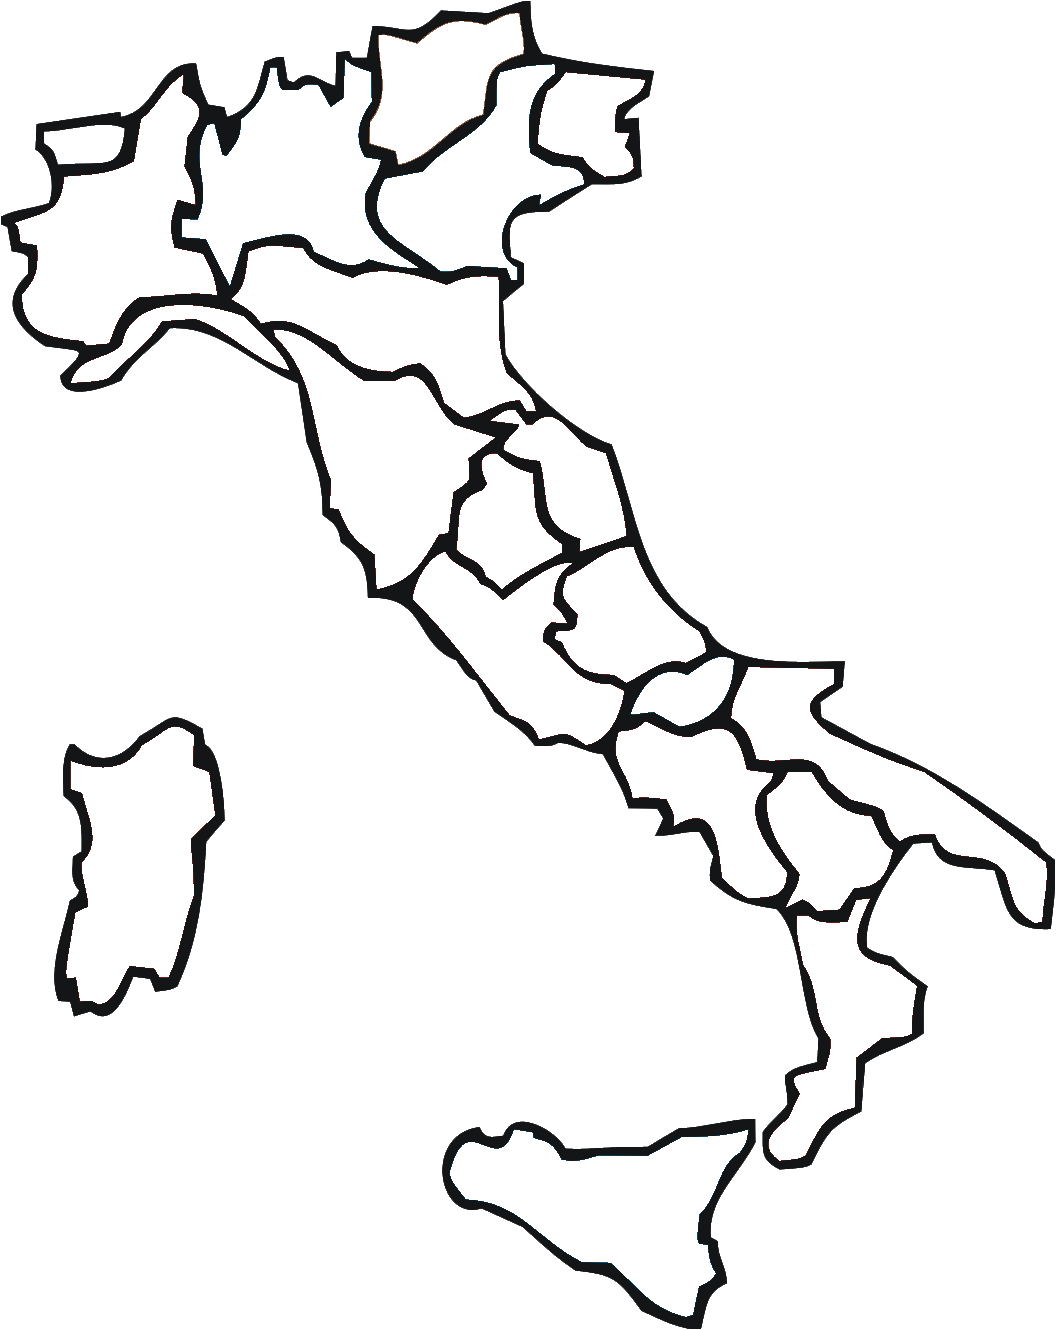 Mapa das regioes italianas